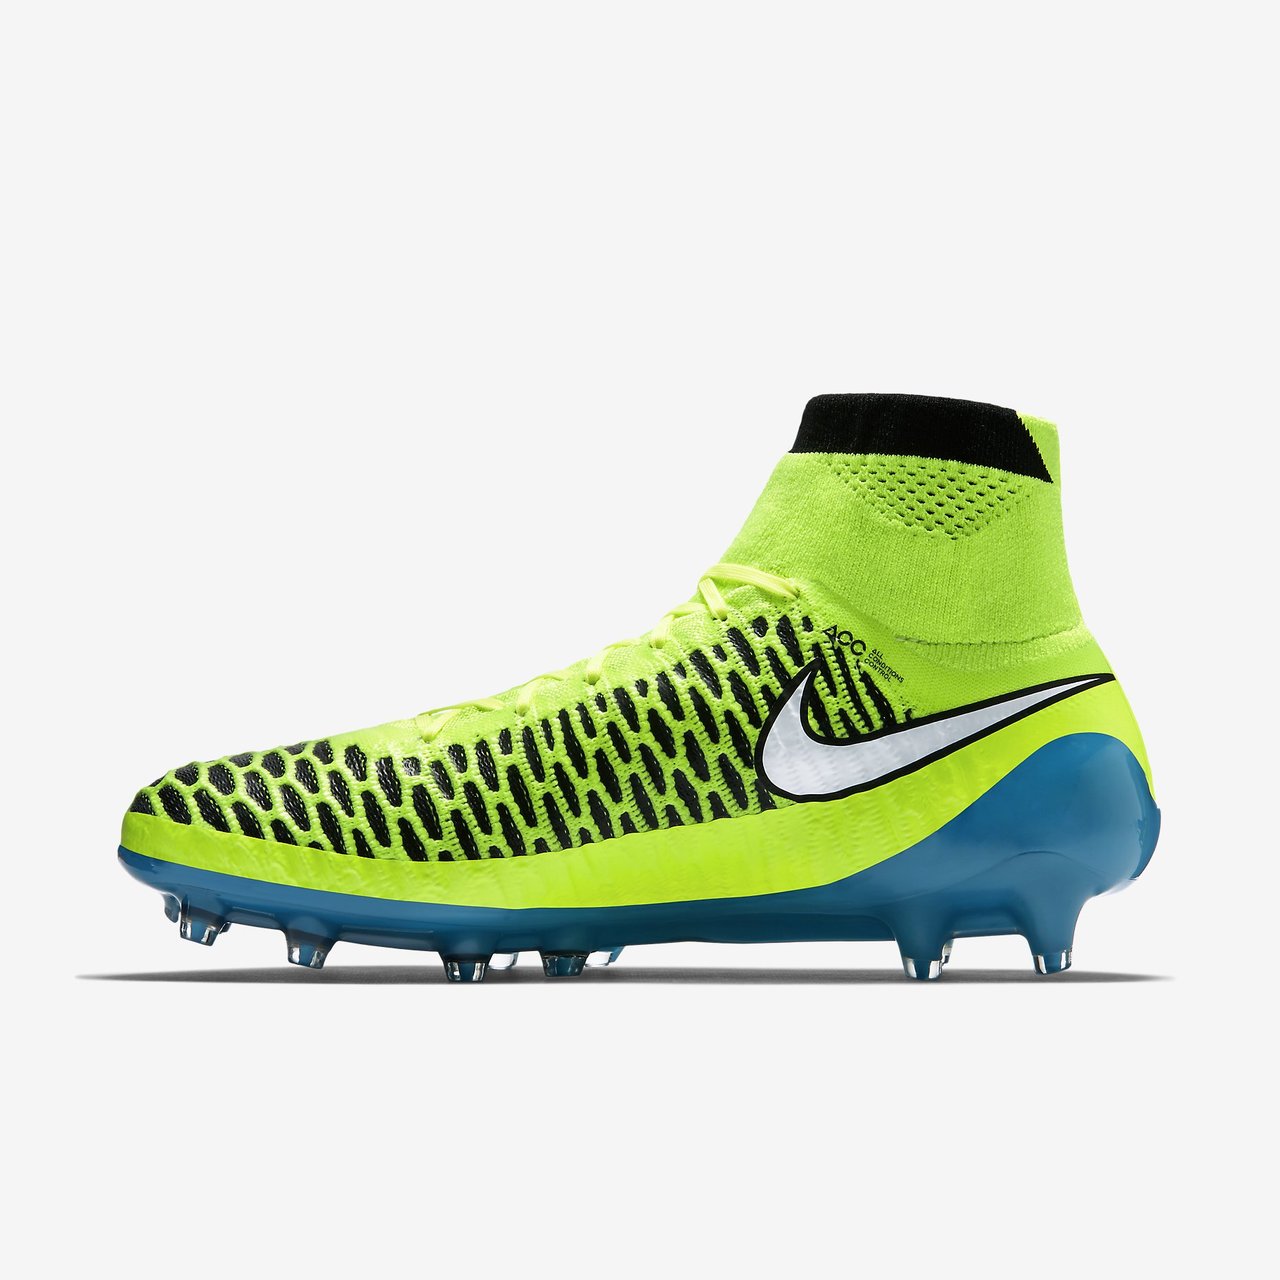 Deals on Nike Men's Magista Onda II Fg Football Shoes